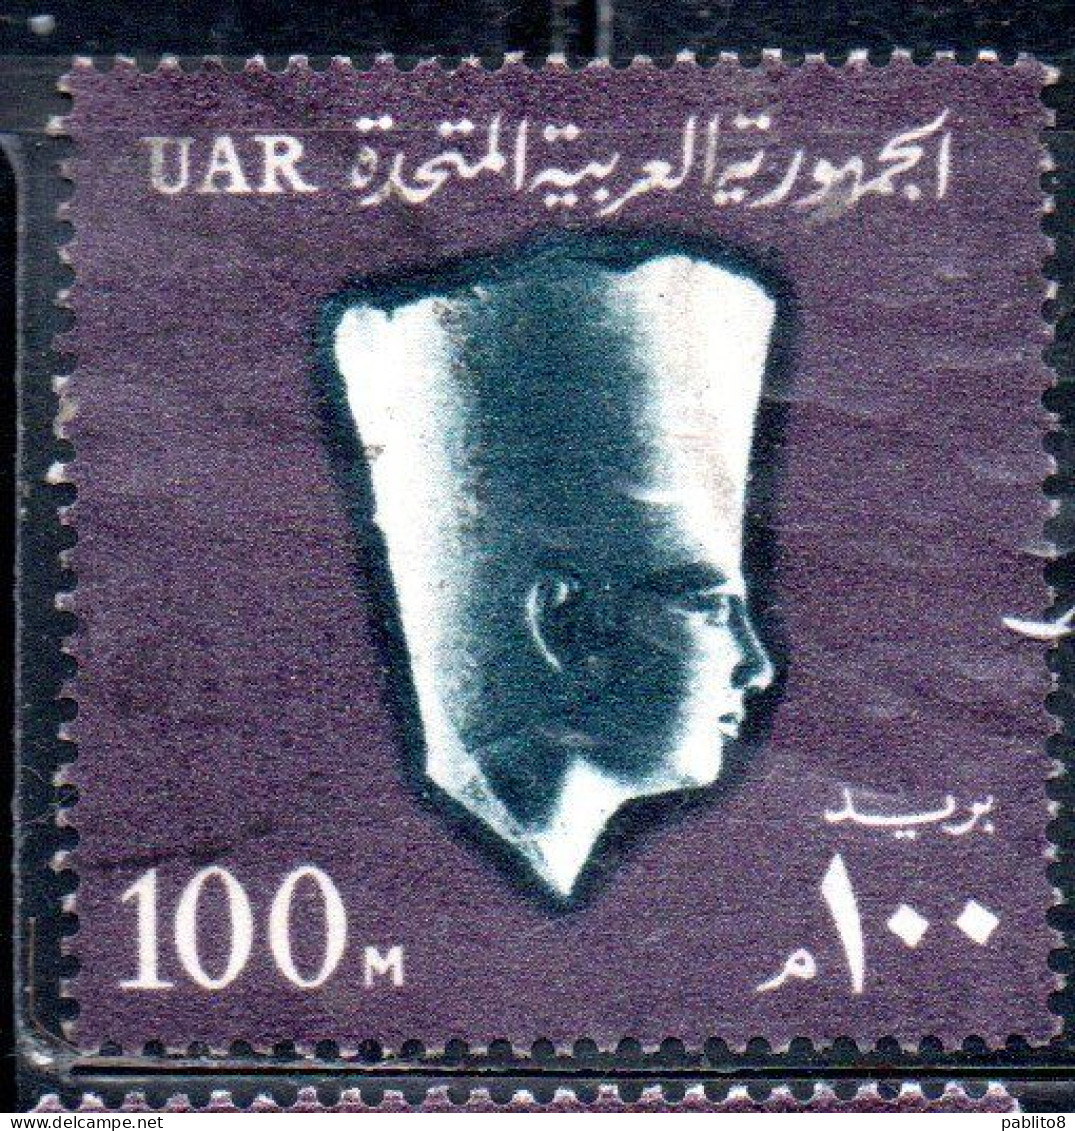 UAR EGYPT EGITTO 1964 1967 PHARAOH USERKAF 5th DYNASTY 100m USED USATO OBLITERE' - Usados